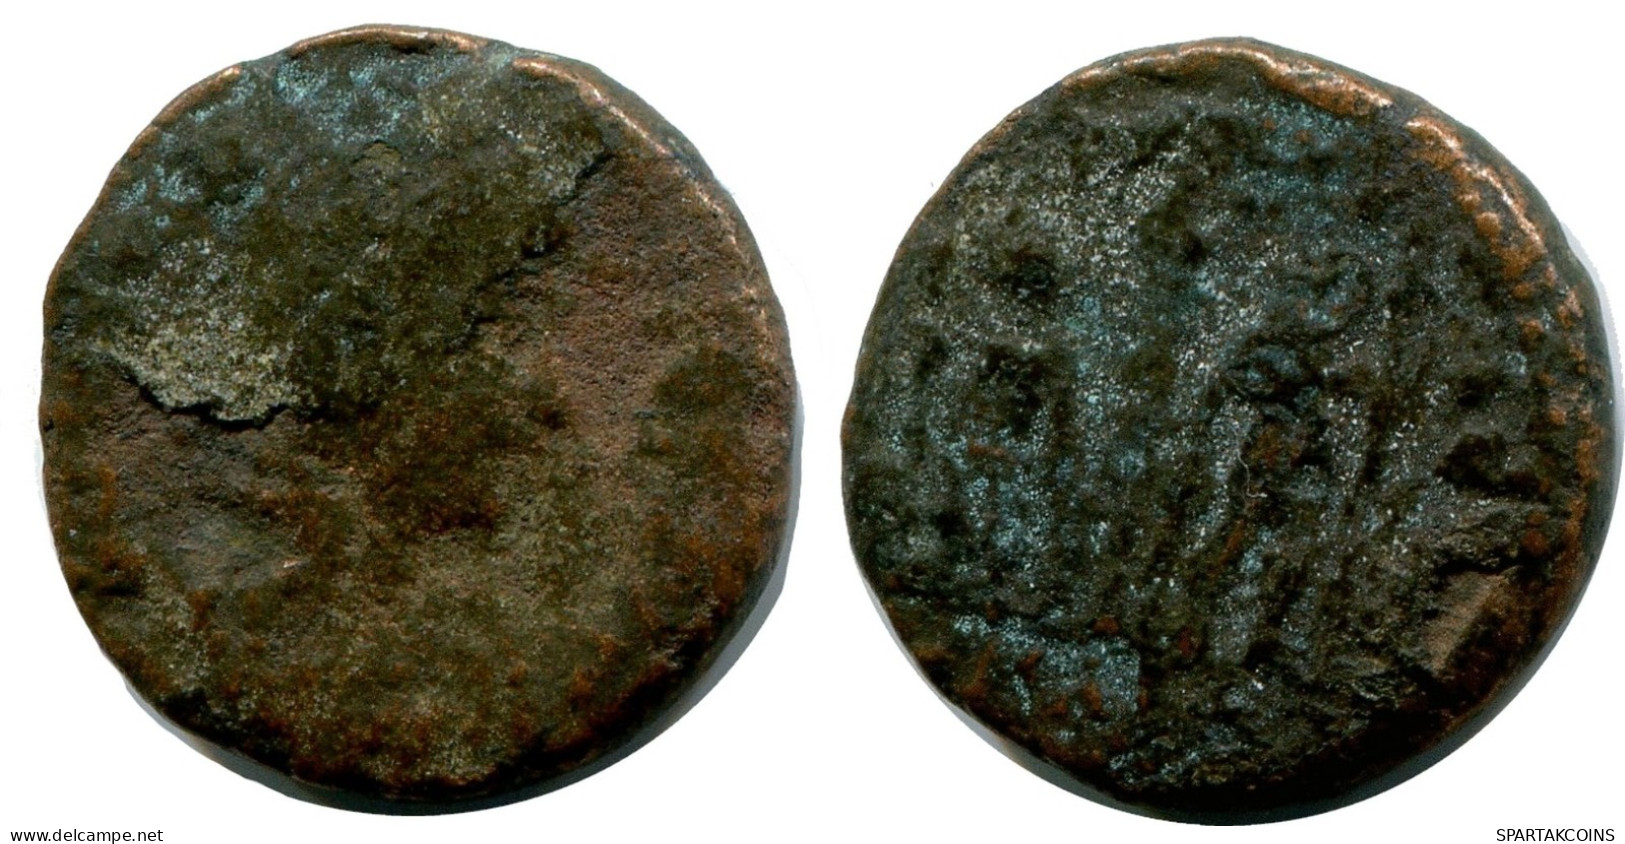 ROMAN Coin MINTED IN ALEKSANDRIA FOUND IN IHNASYAH HOARD EGYPT #ANC10146.14.U.A - El Impero Christiano (307 / 363)